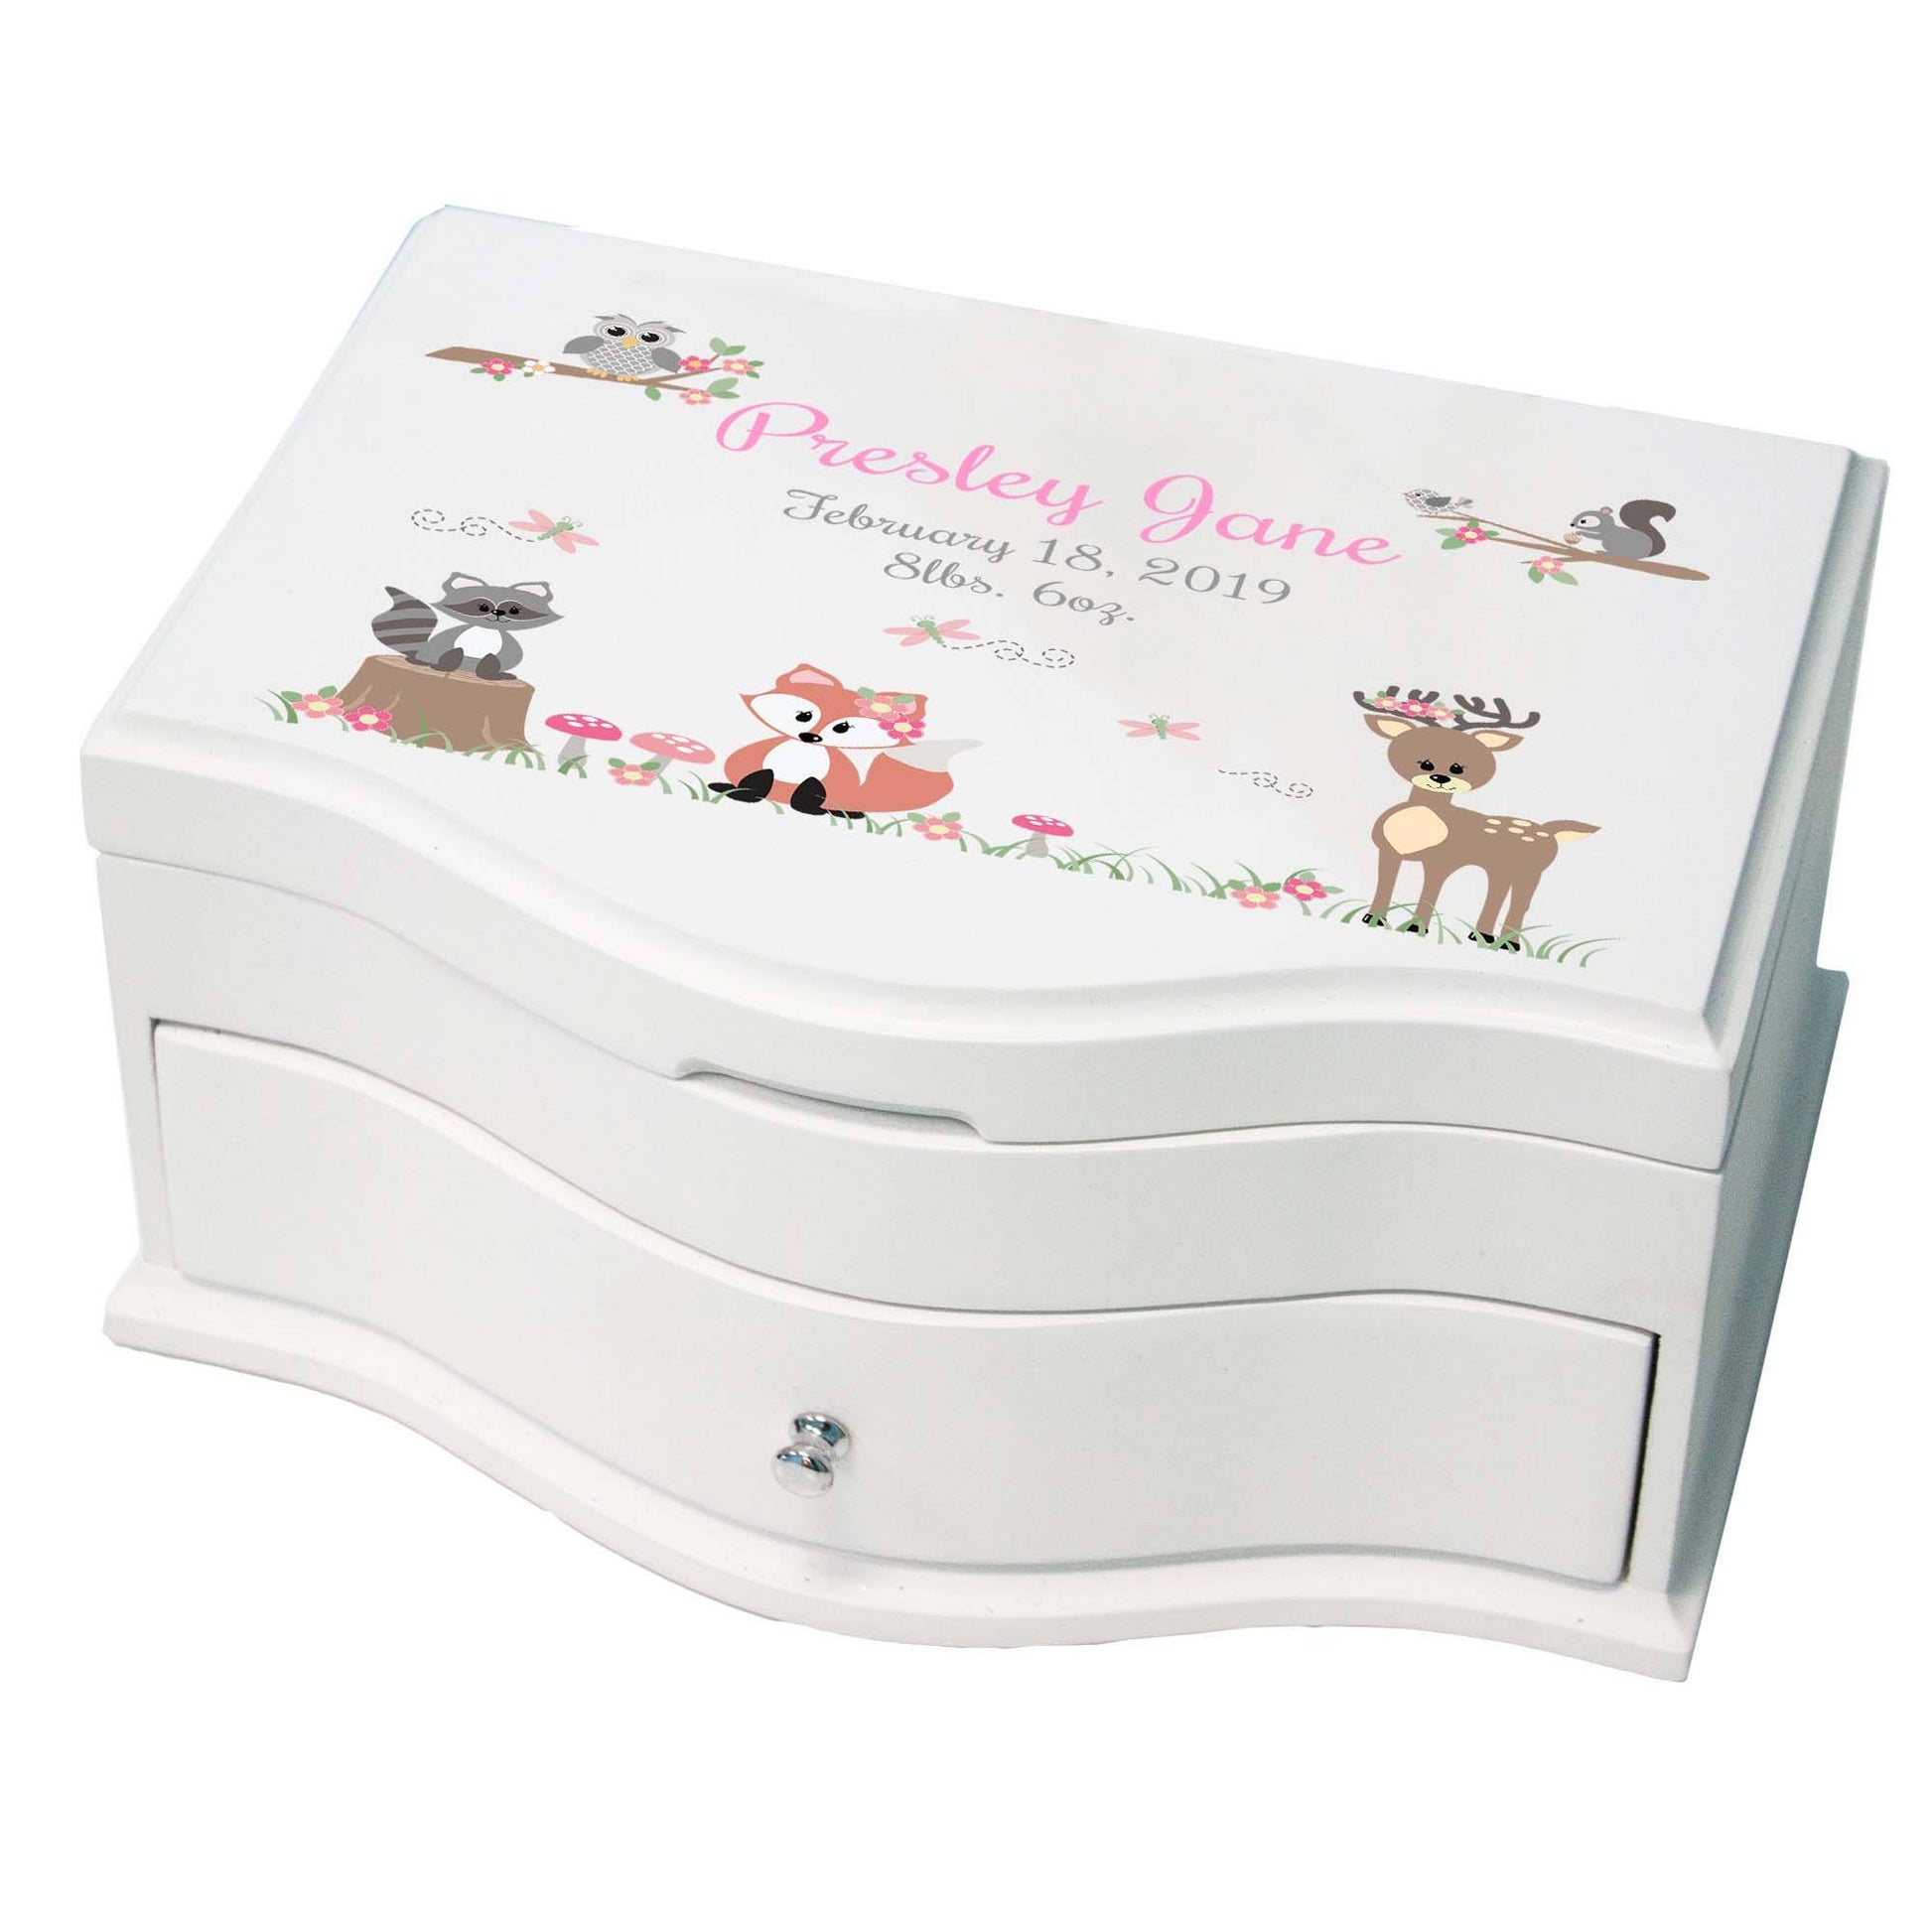 Princess Girls Jewelry Box with Gray Woodland Critters design